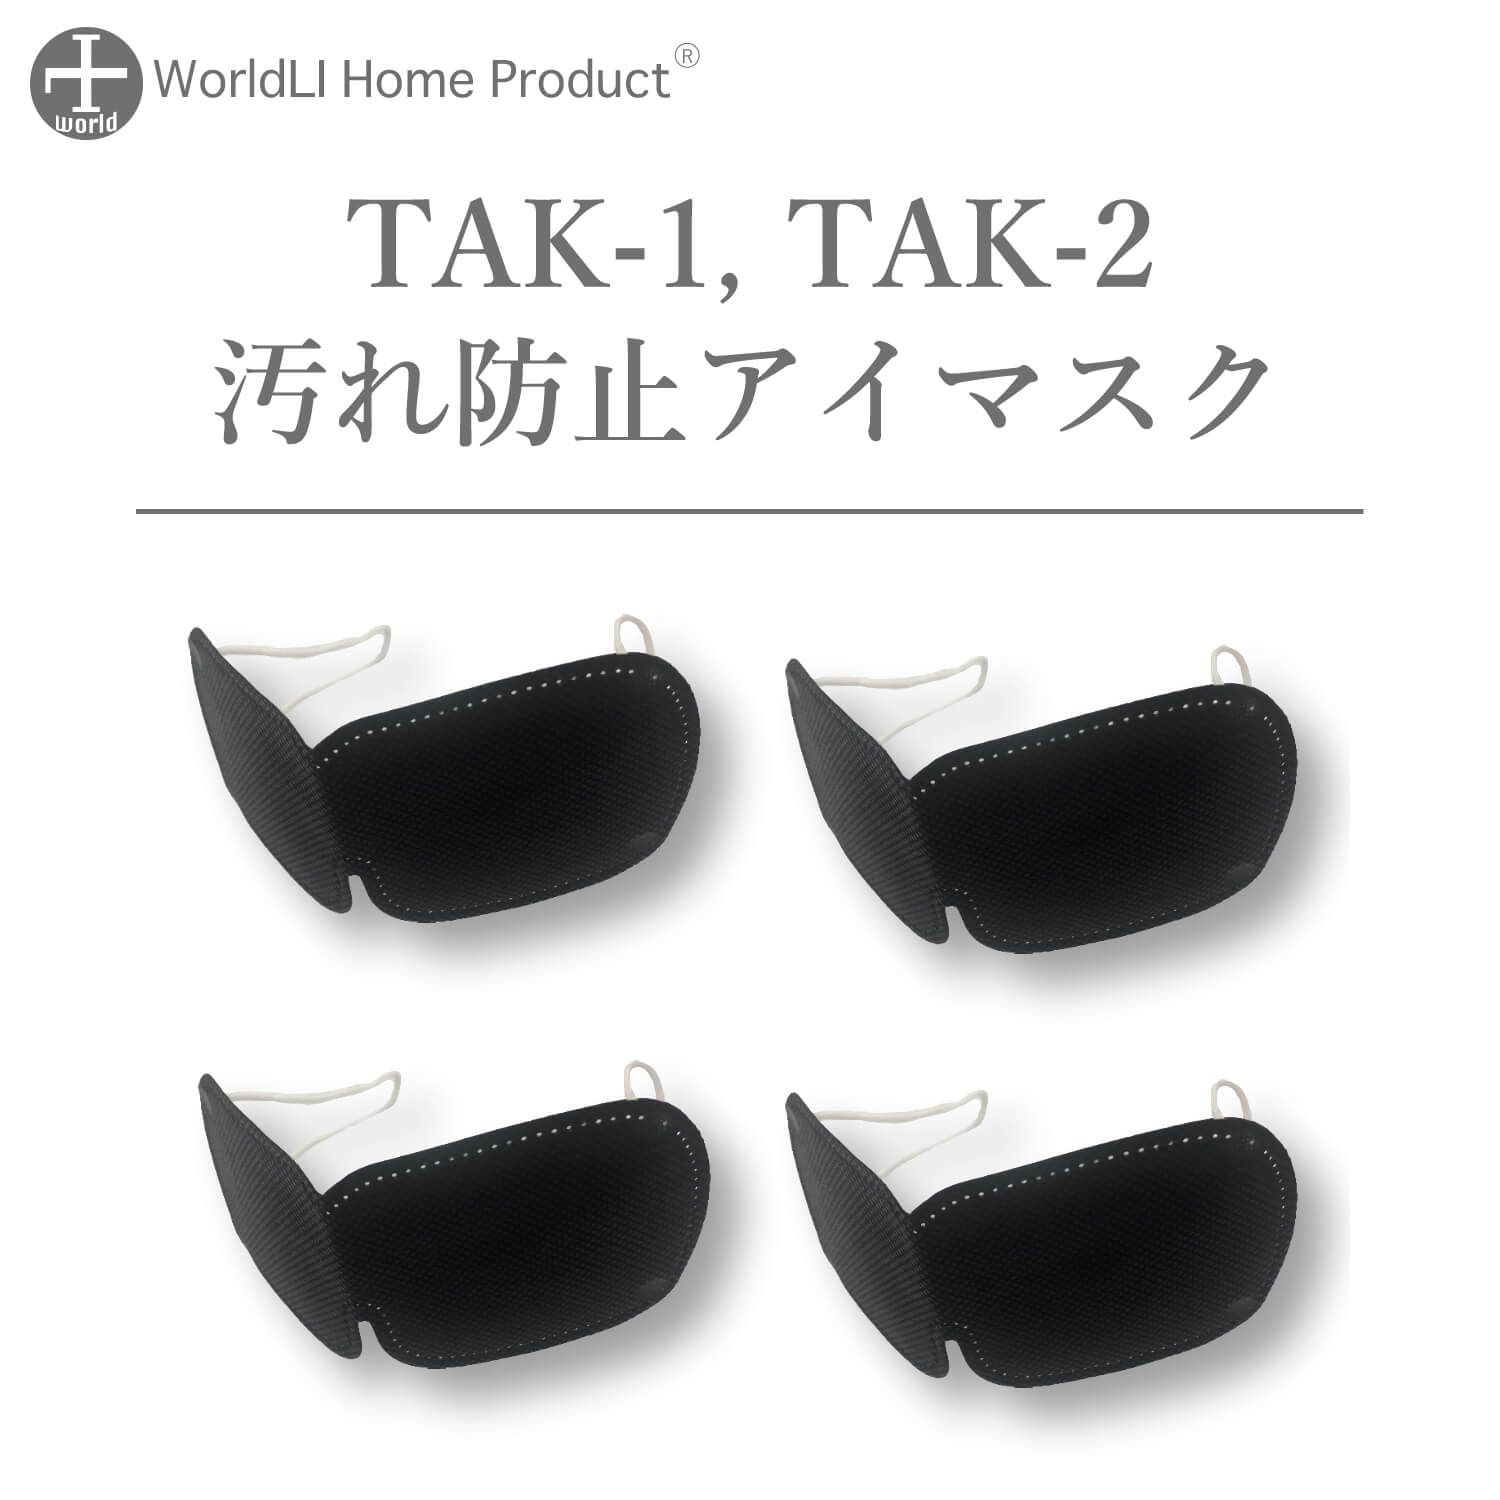 TAK-1 本店 TAK-2用アイマスク 不織布 アイマスク 4枚入り 使い捨て 祝開店！大放出セール開催中 ブラック 目元マッサージャーカバー対応 Product LIworld WorldLI Home